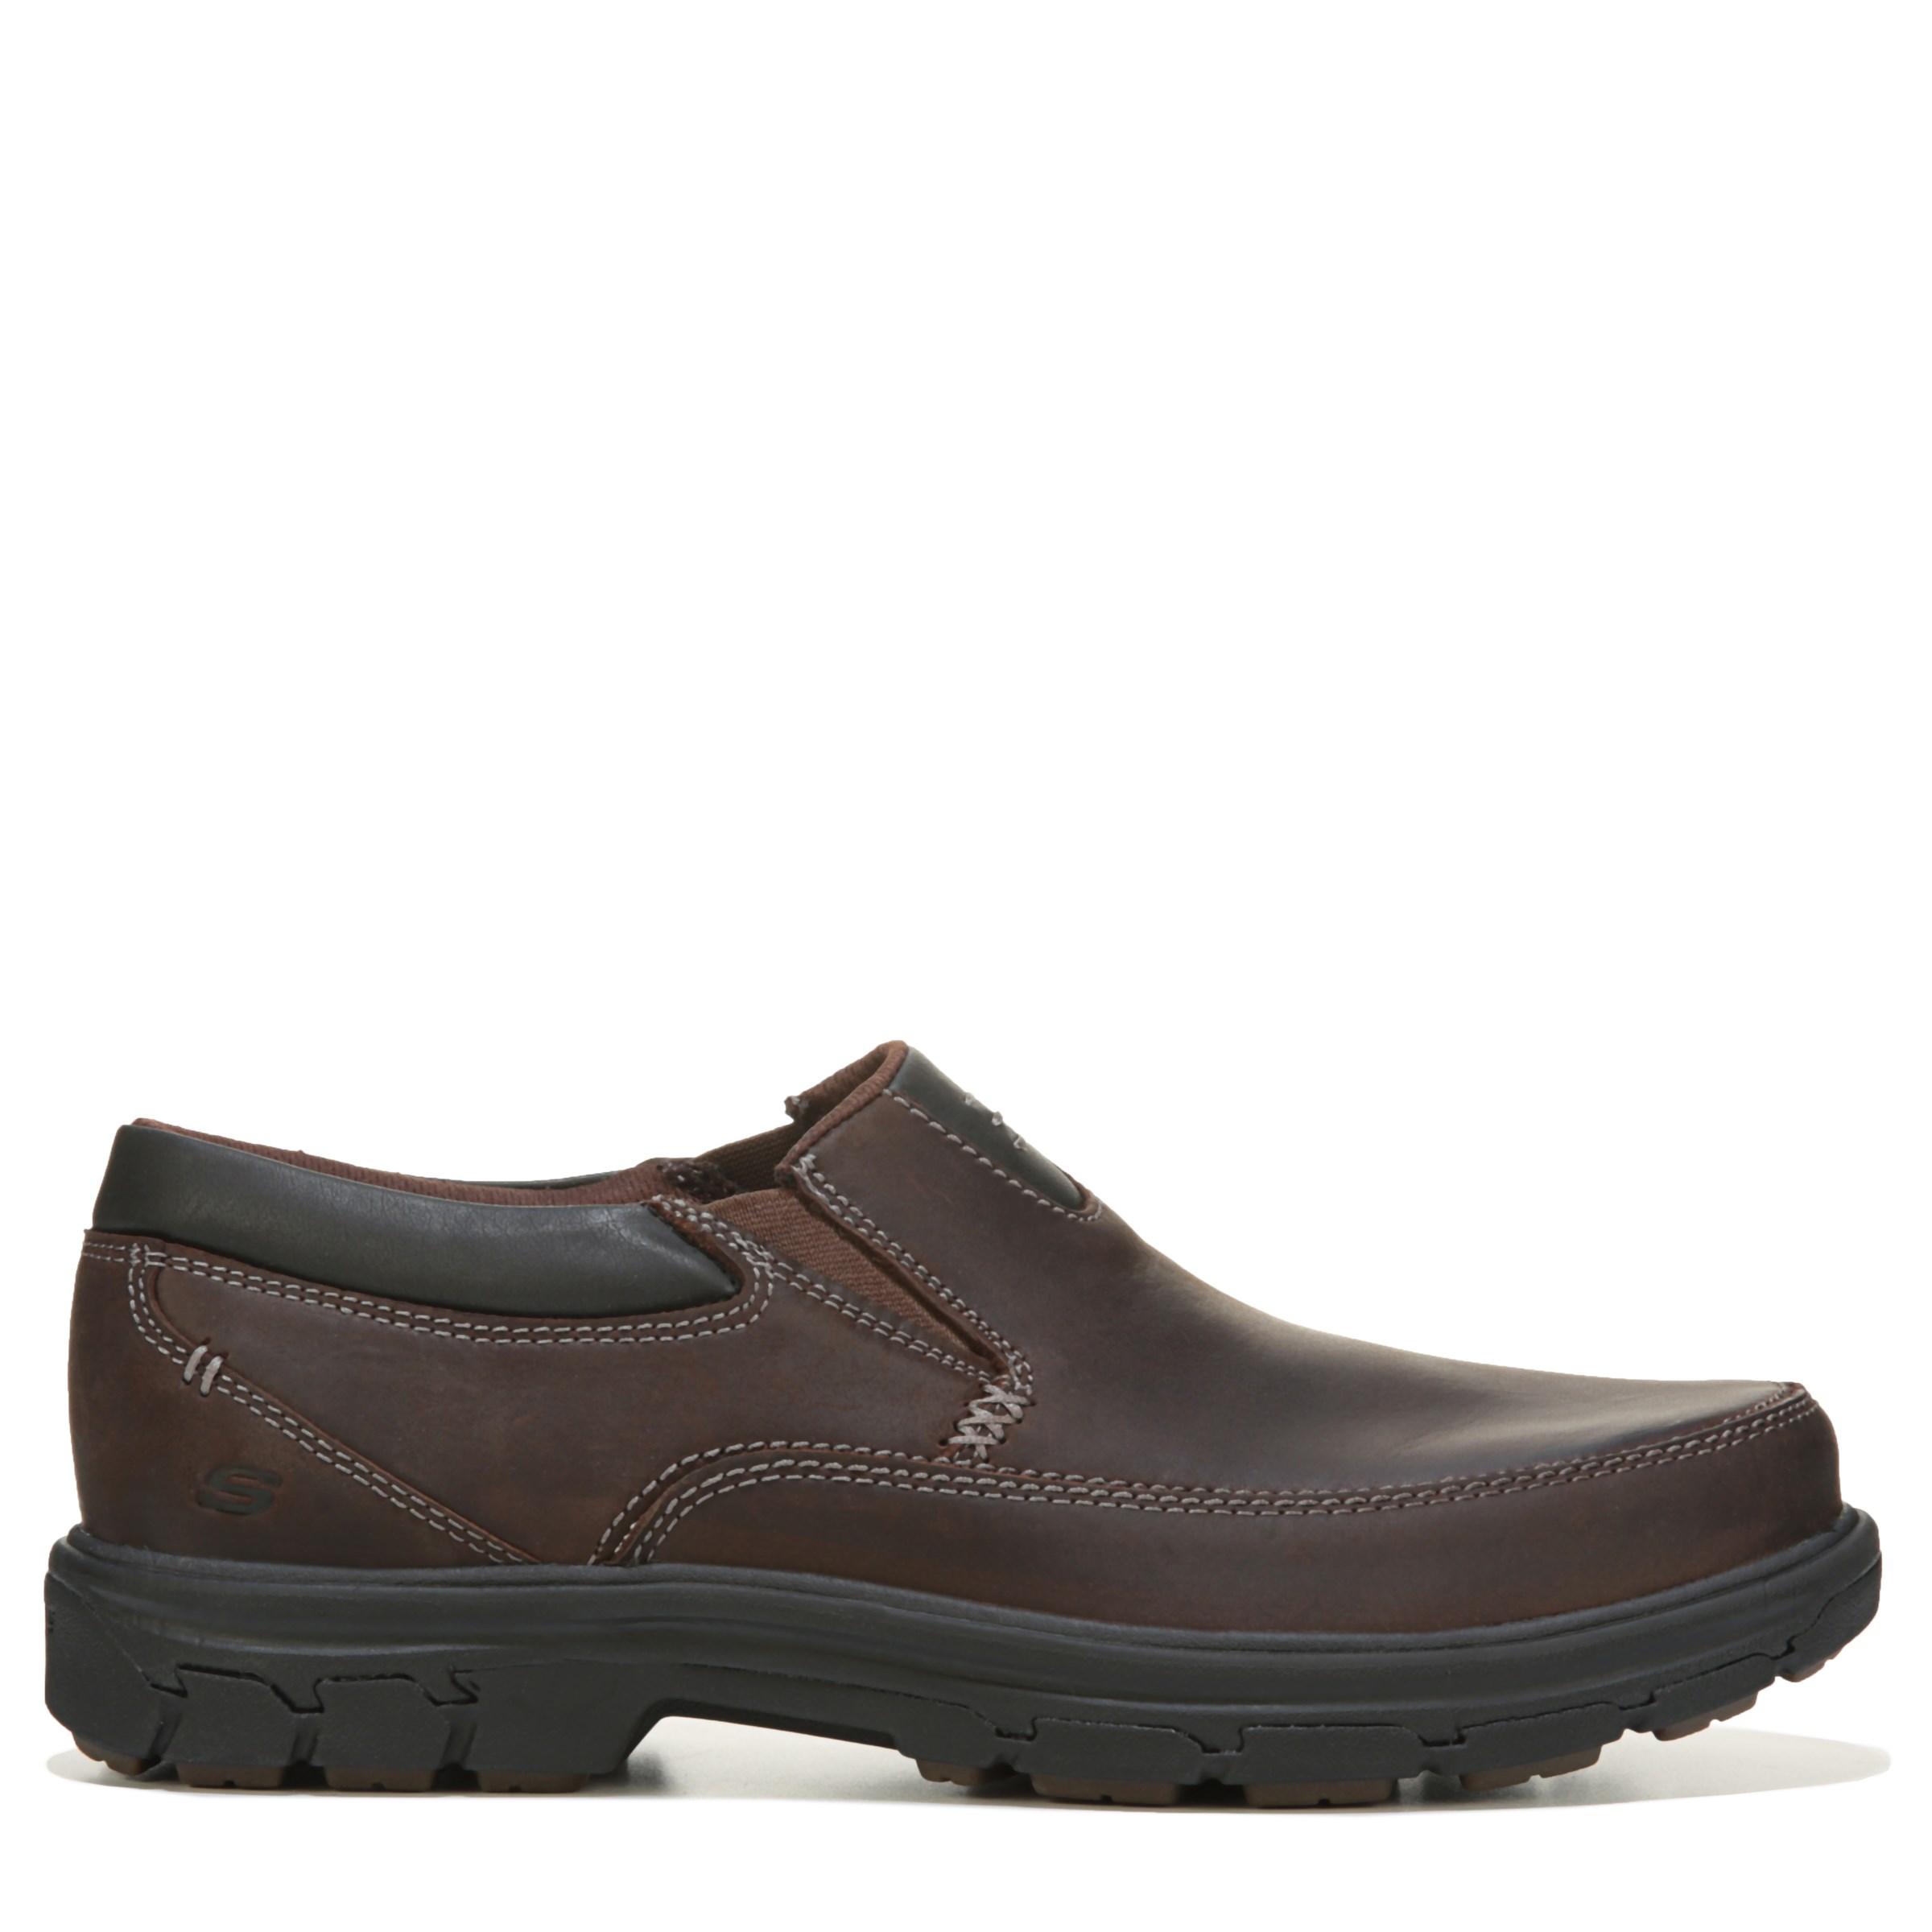 Skechers Search Memory Foam Medium/wide Leather Slip On Shoes in Brown ...